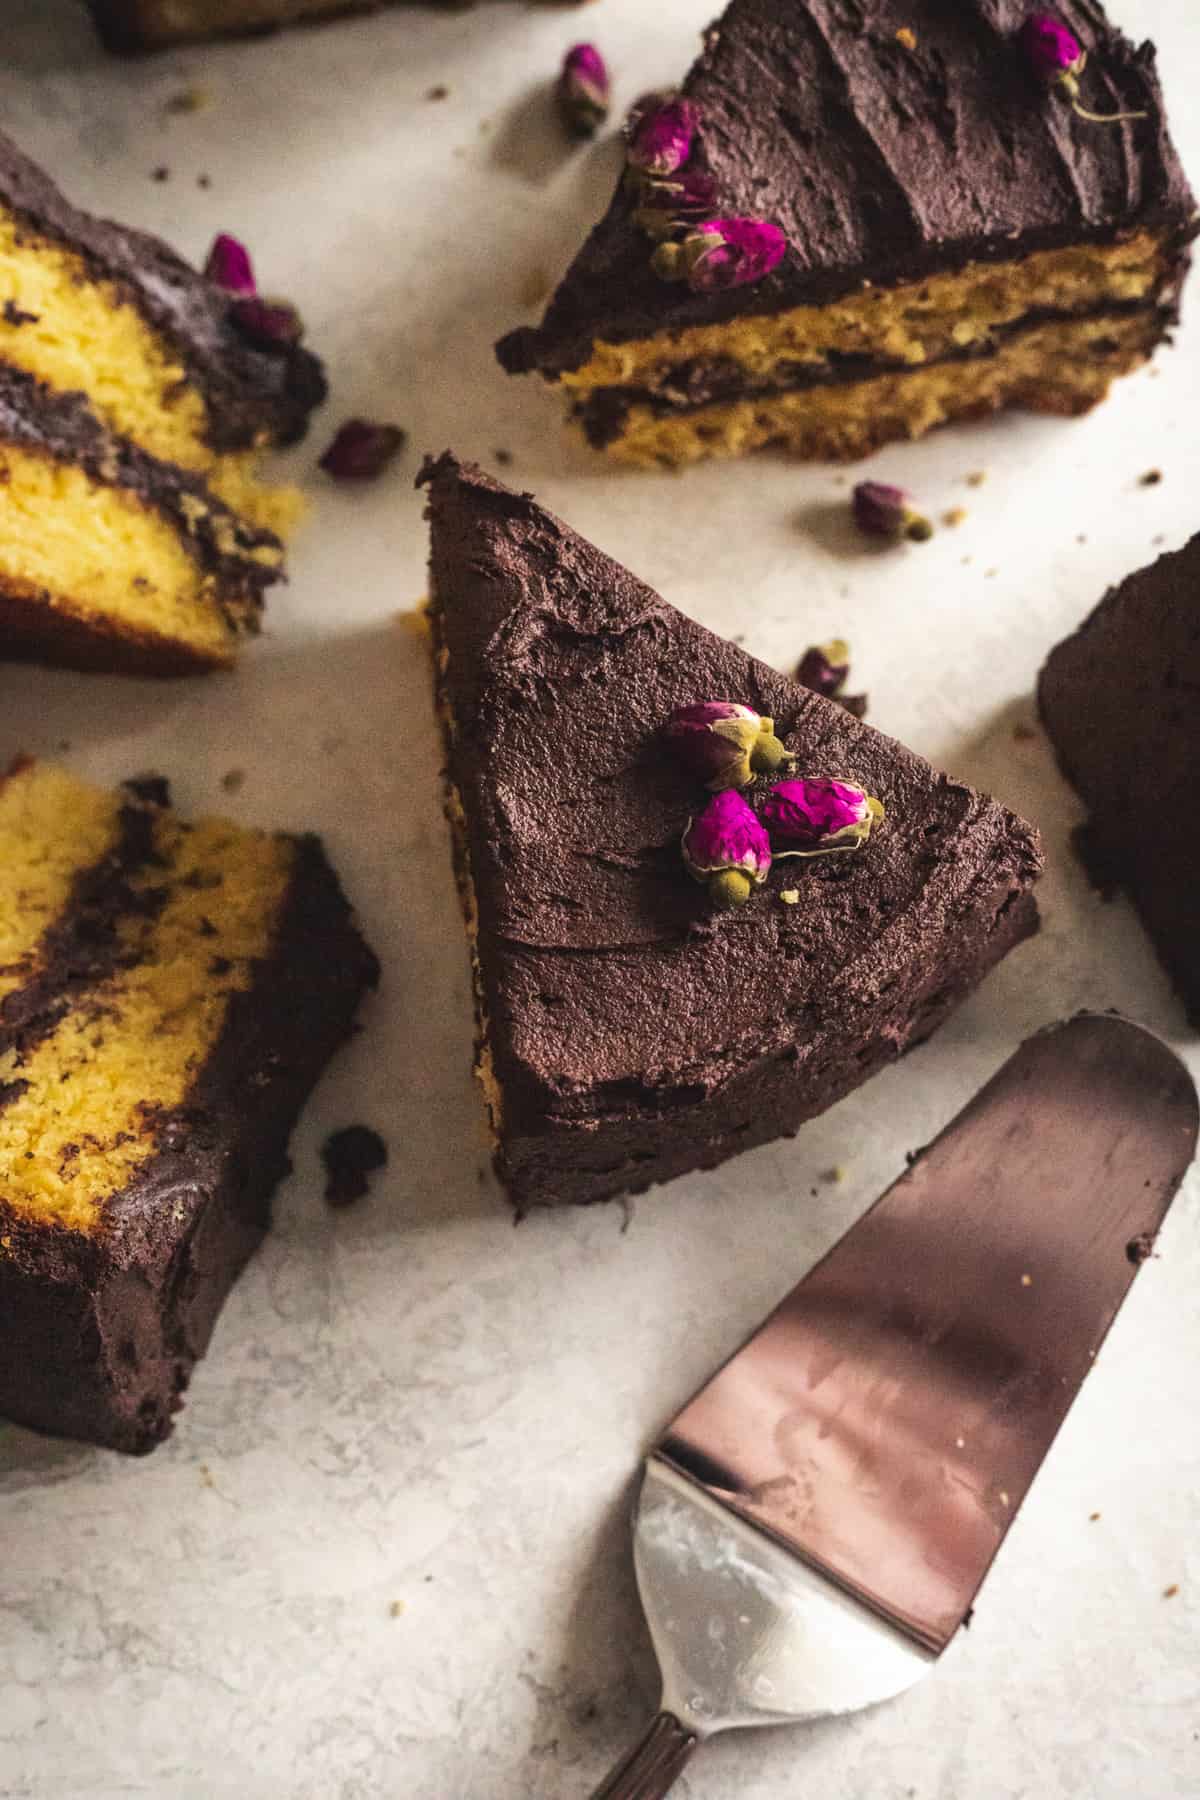 yellow cake with chocolate buttercream